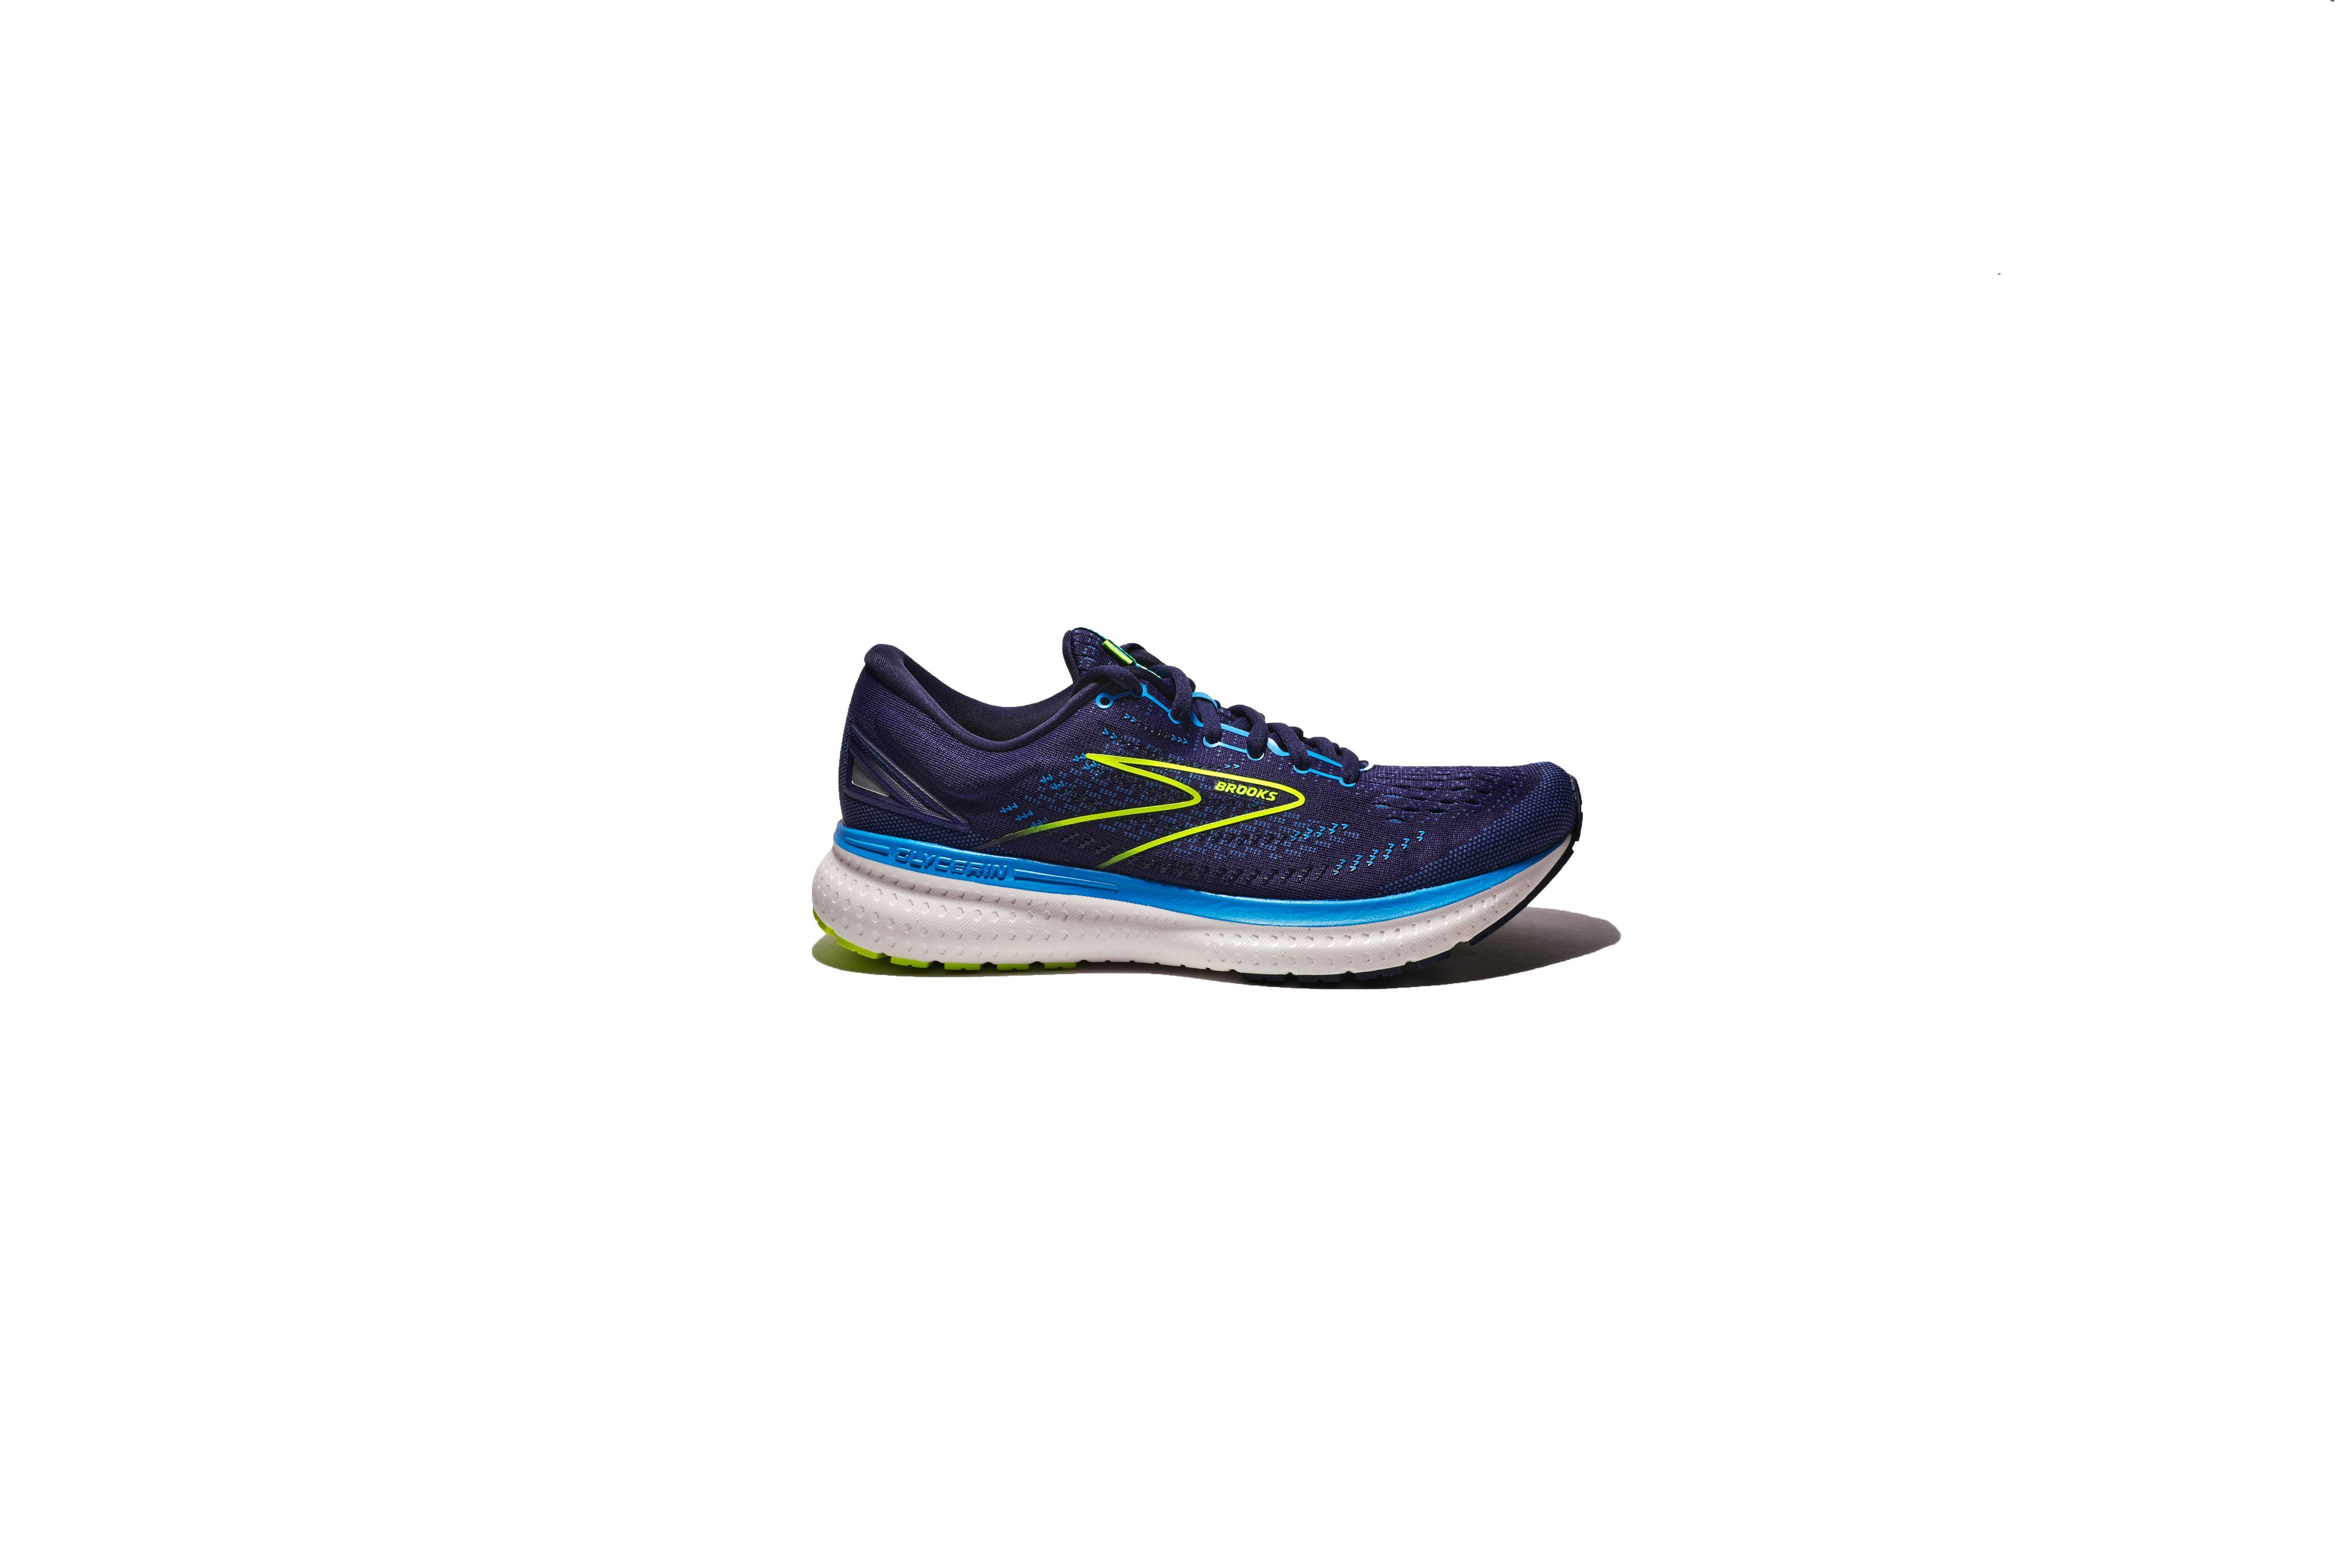 Best Brooks Running Shoes 2021 | Brooks Running Shoe Reviews